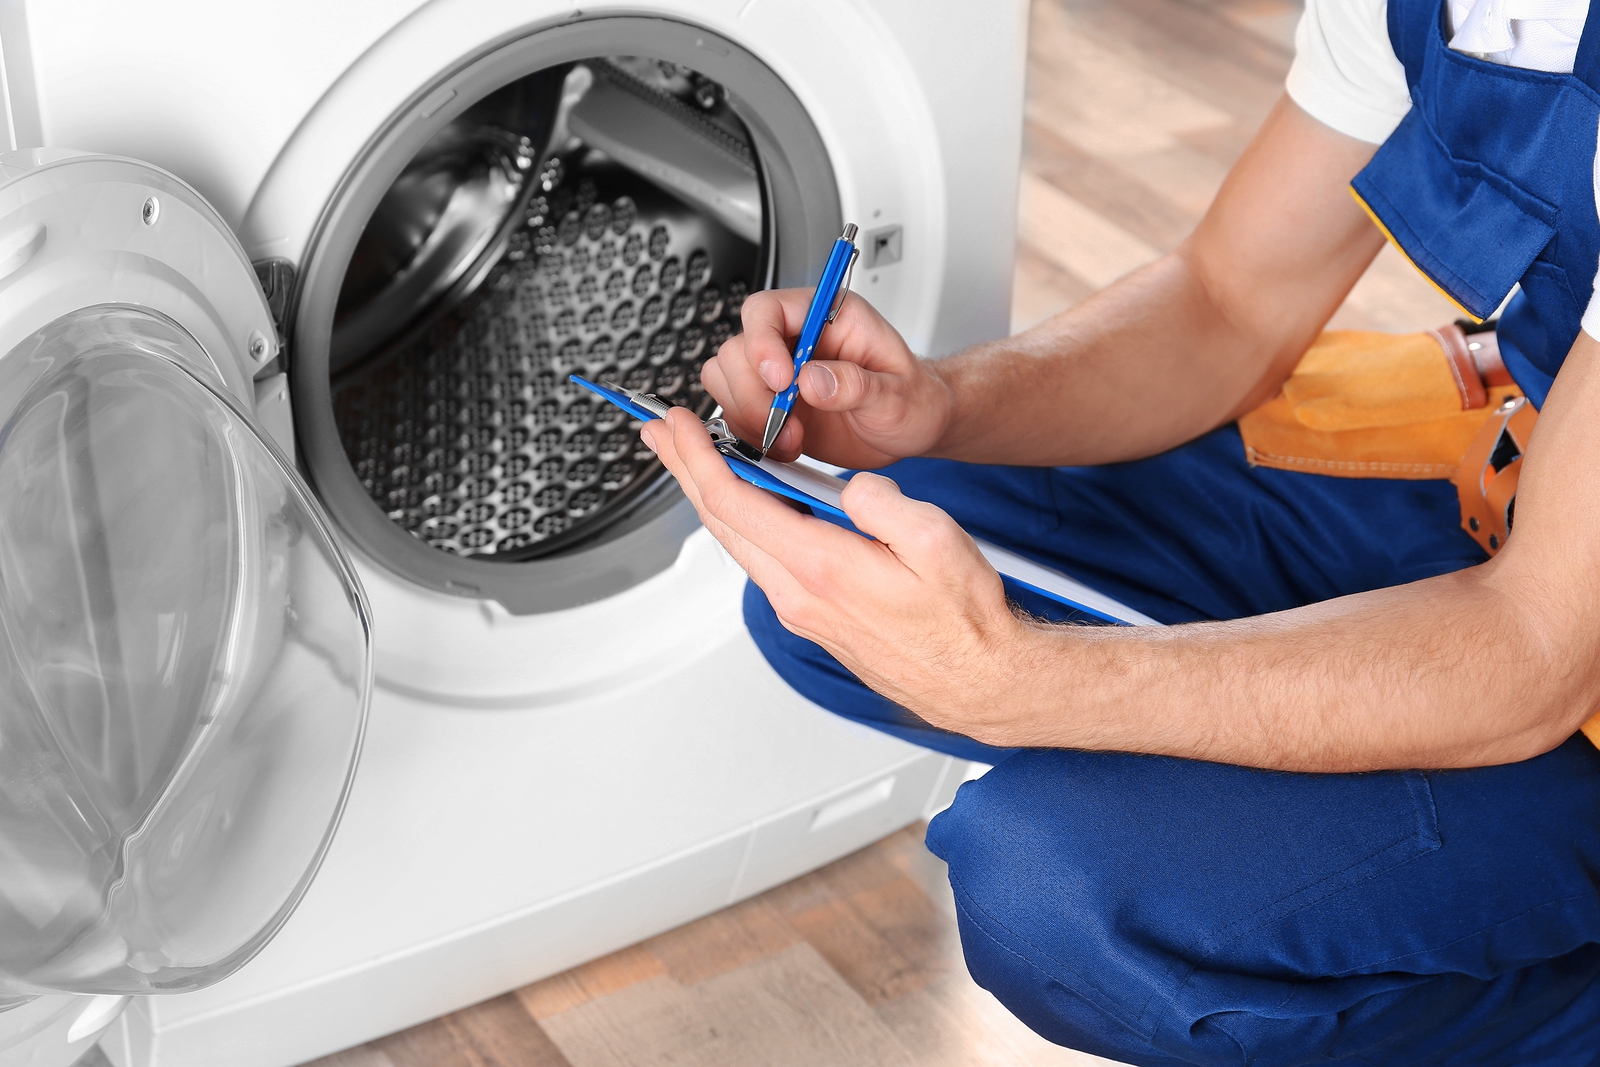 Whirlpool Appliance Repair Near Me Dependable Refrigeration & Appliance Repair Service